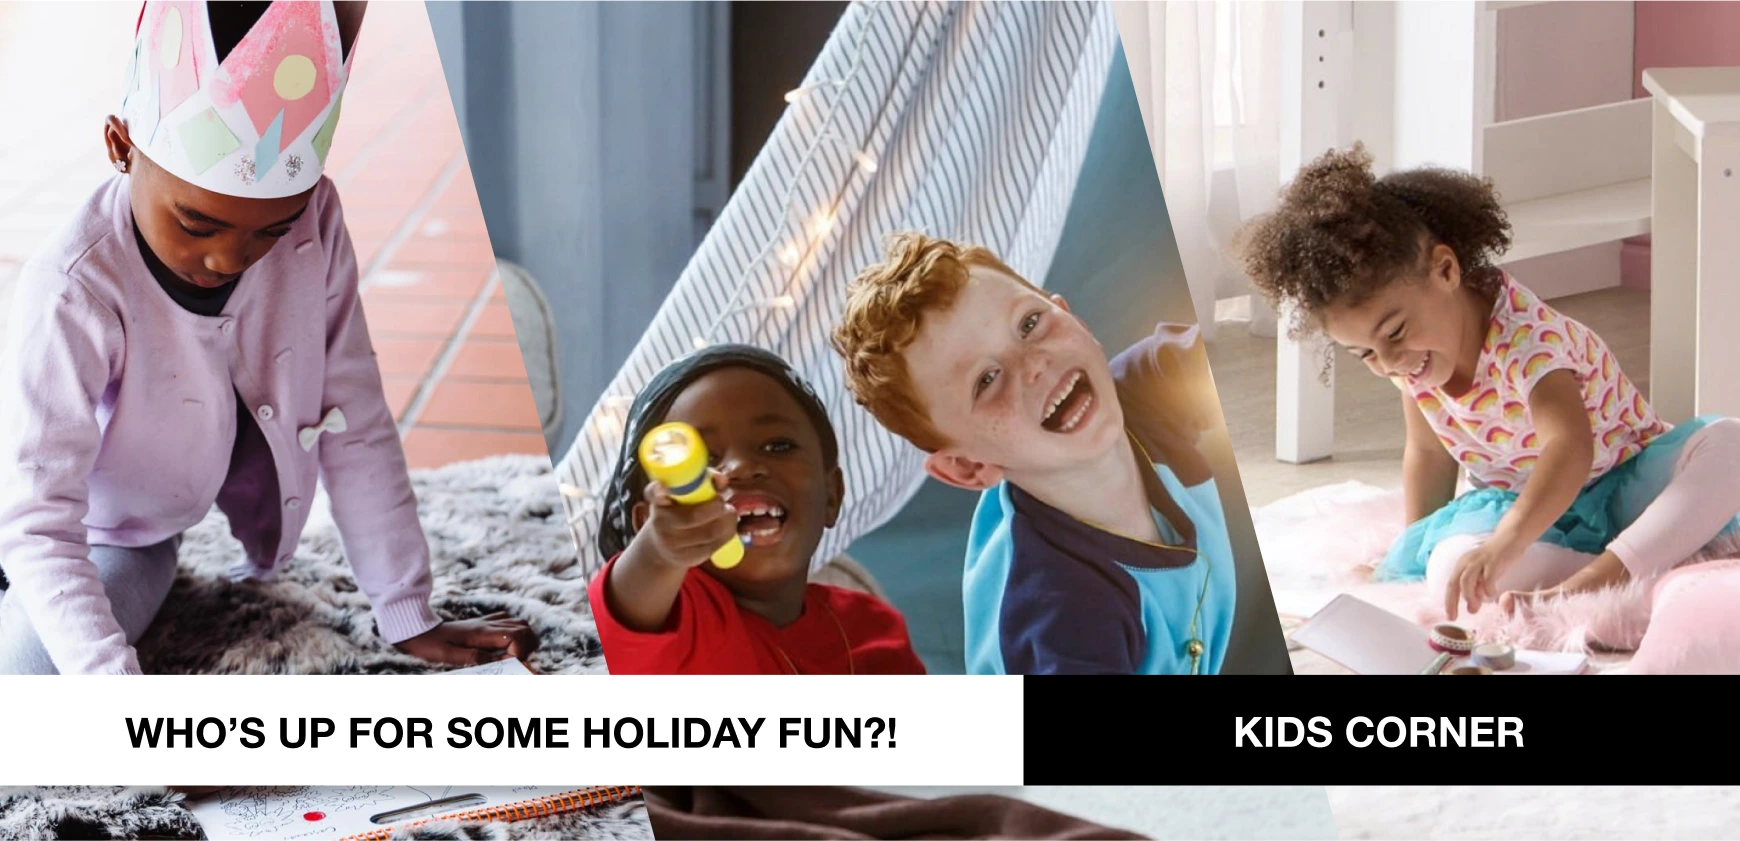 kids corner holiday fun